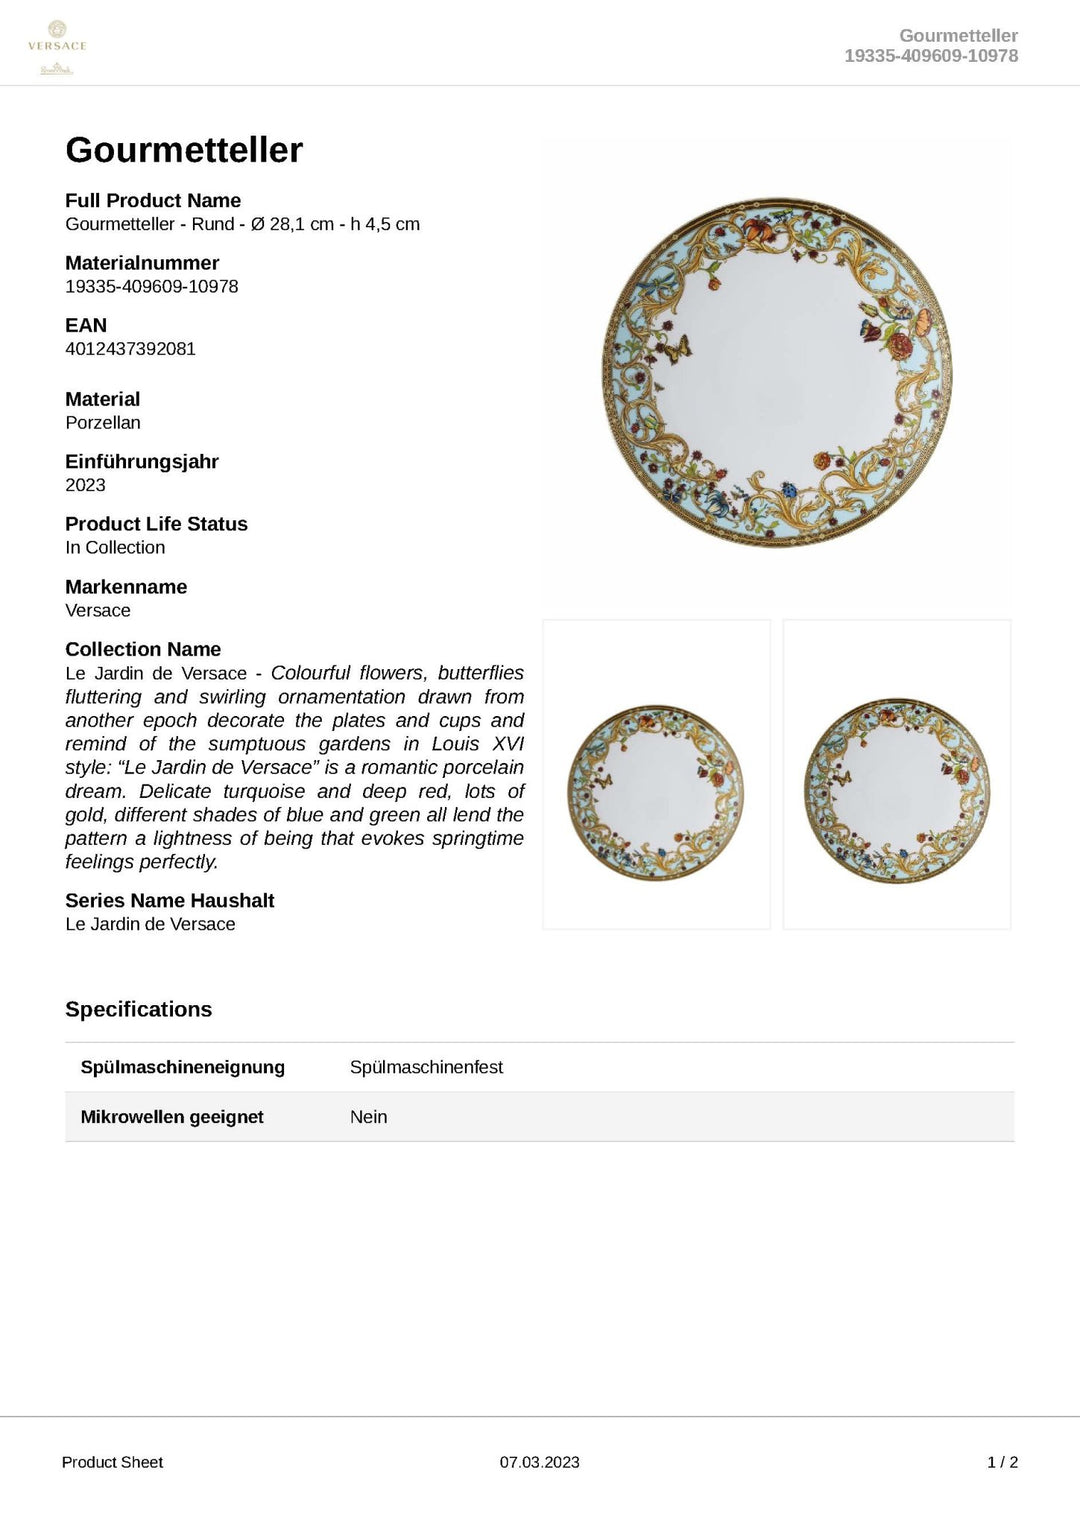 Rosenthal Versace - Le jardin de Versace 'Gourmetteller 28 cm' 2023-19335-409609-10978